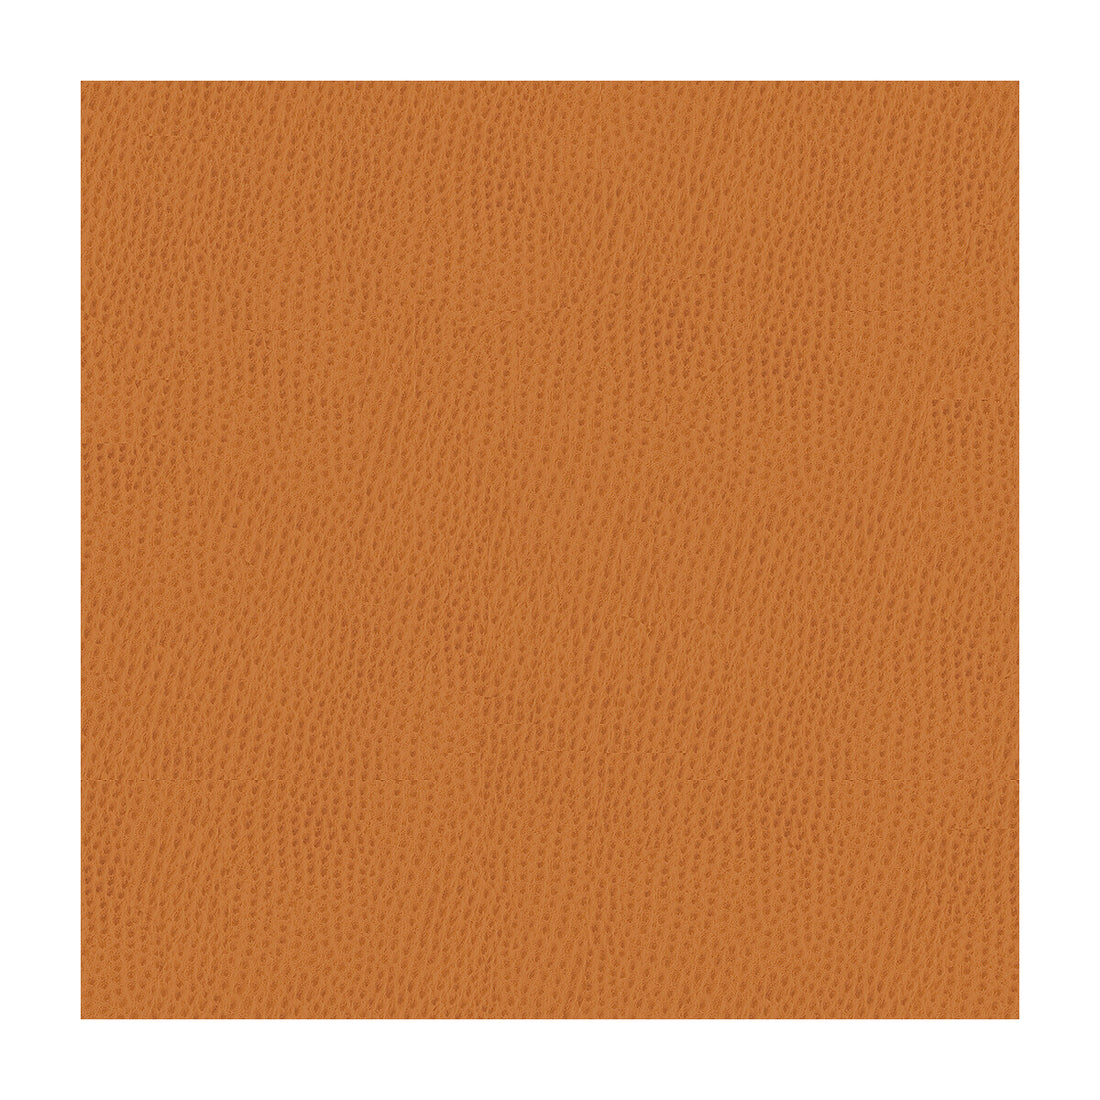 Kravet Contract fabric in belus-212 color - pattern BELUS.212.0 - by Kravet Contract